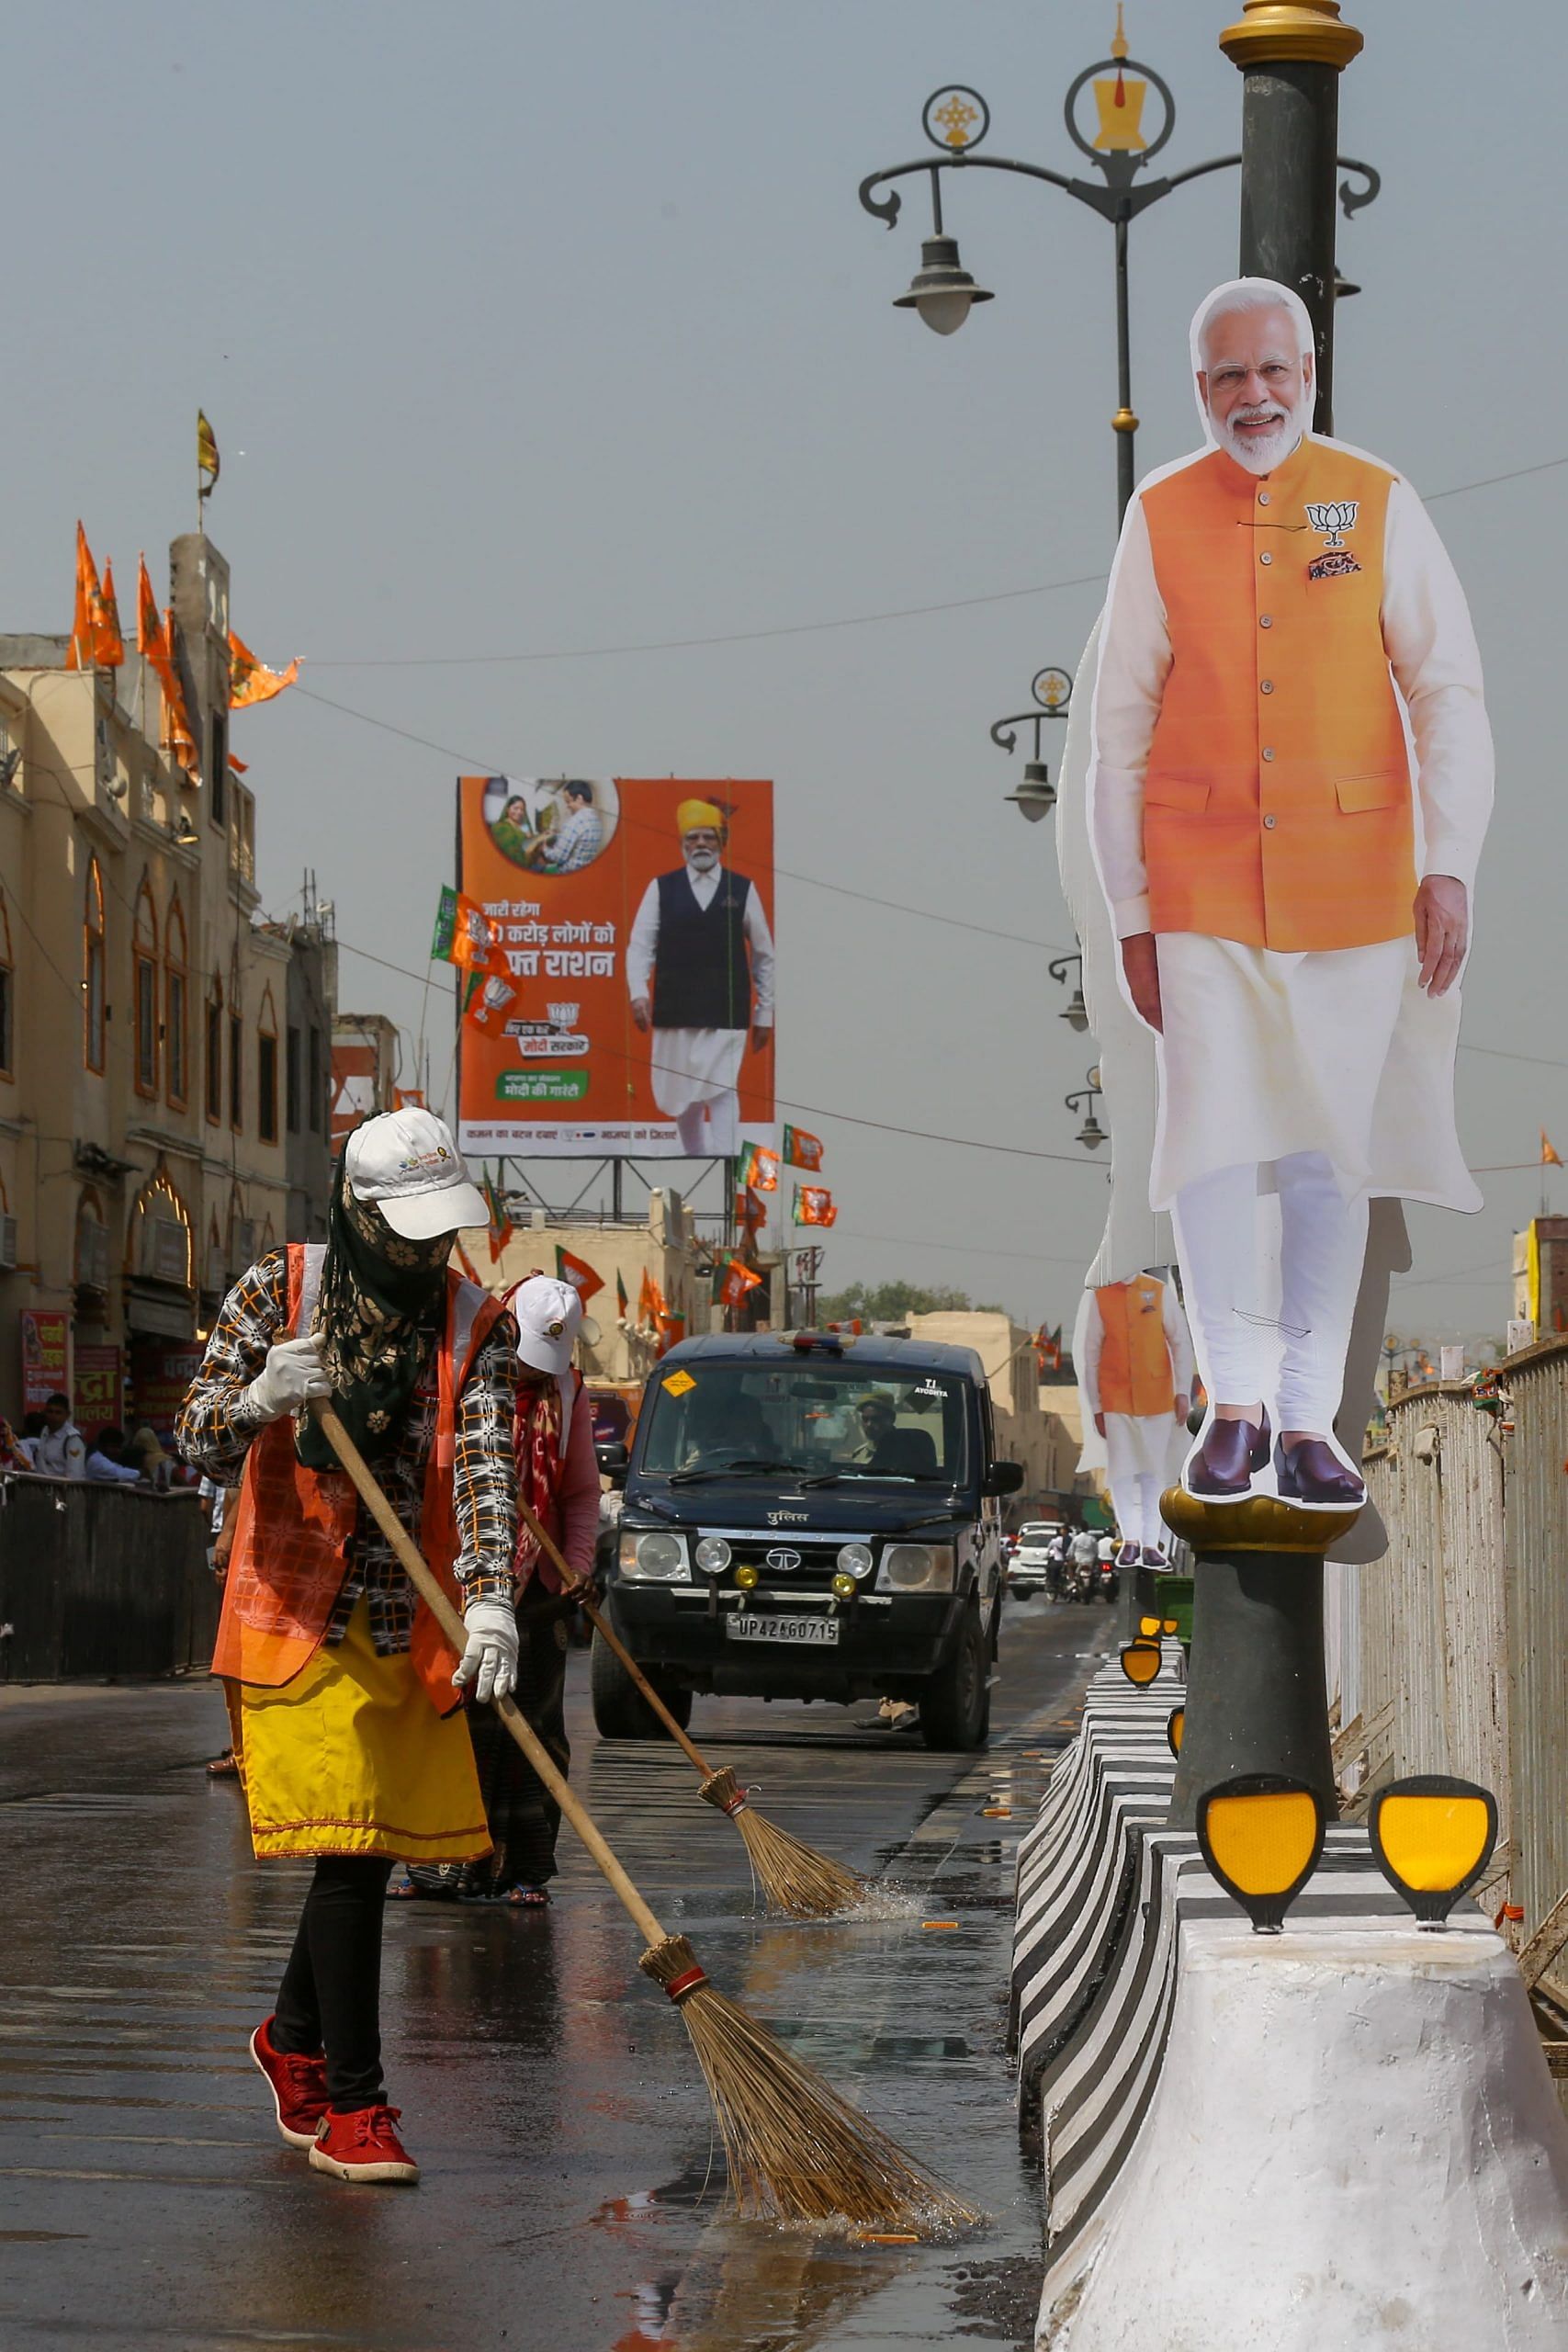 2 km roadshow, obeisance to ram lalla, sea of supporters — pm modi’s blockbuster procession in ayodhya